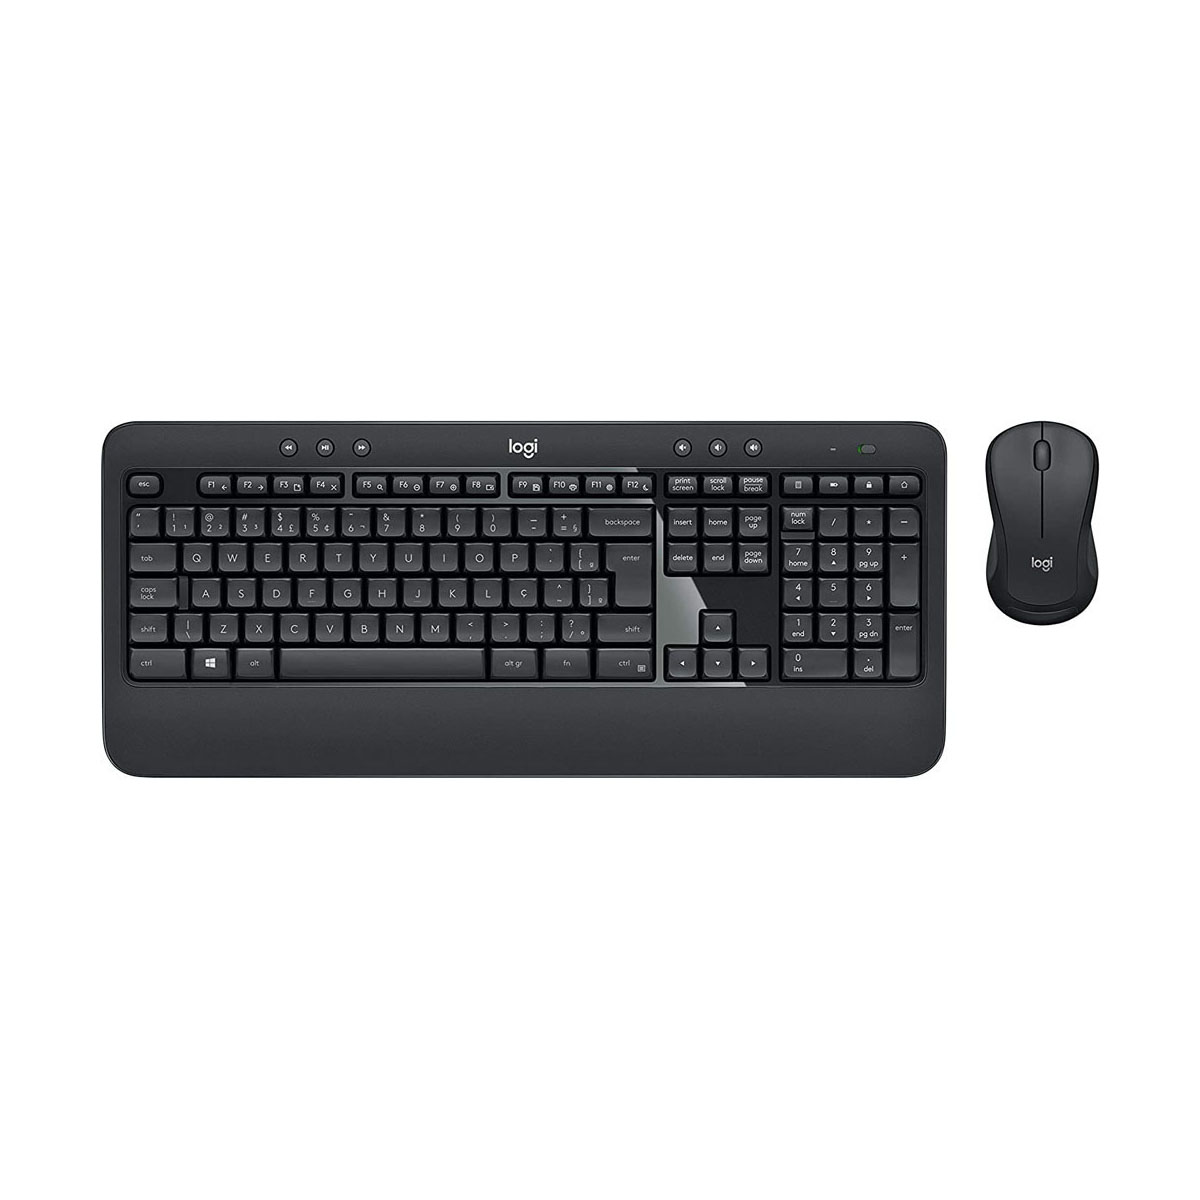 shop44-keyboard-mouse (3)